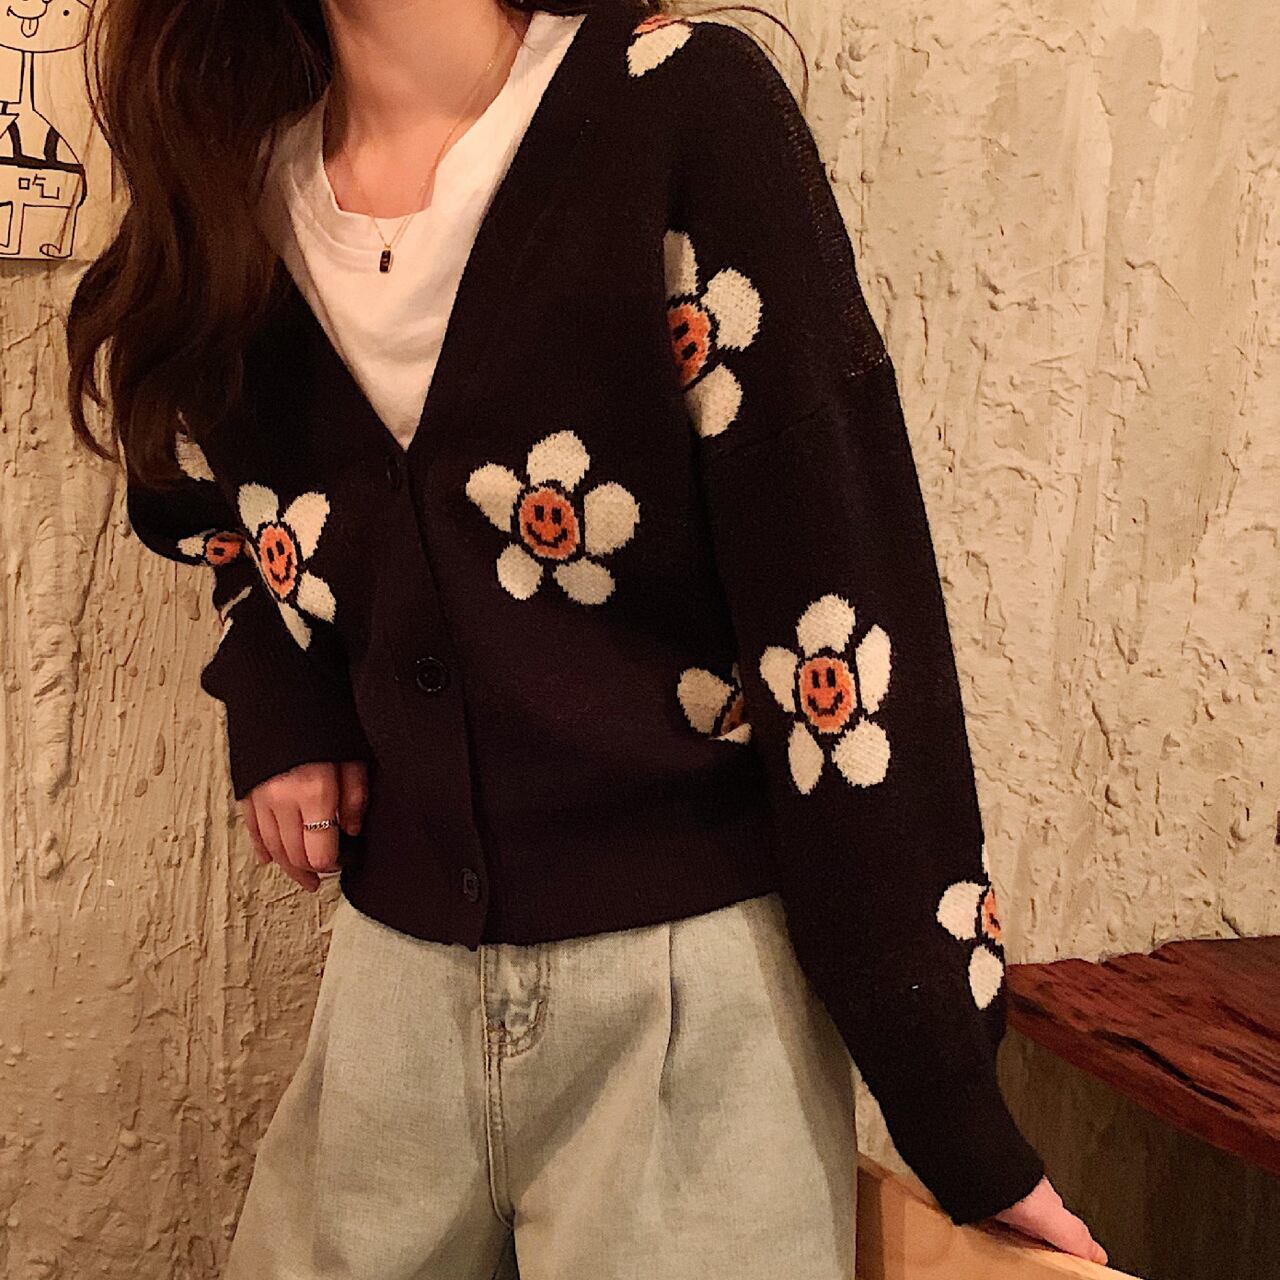 REGIT】SMILE FLOWER KNIT CARDIGAN-MINT 韓国ファッション スマイル